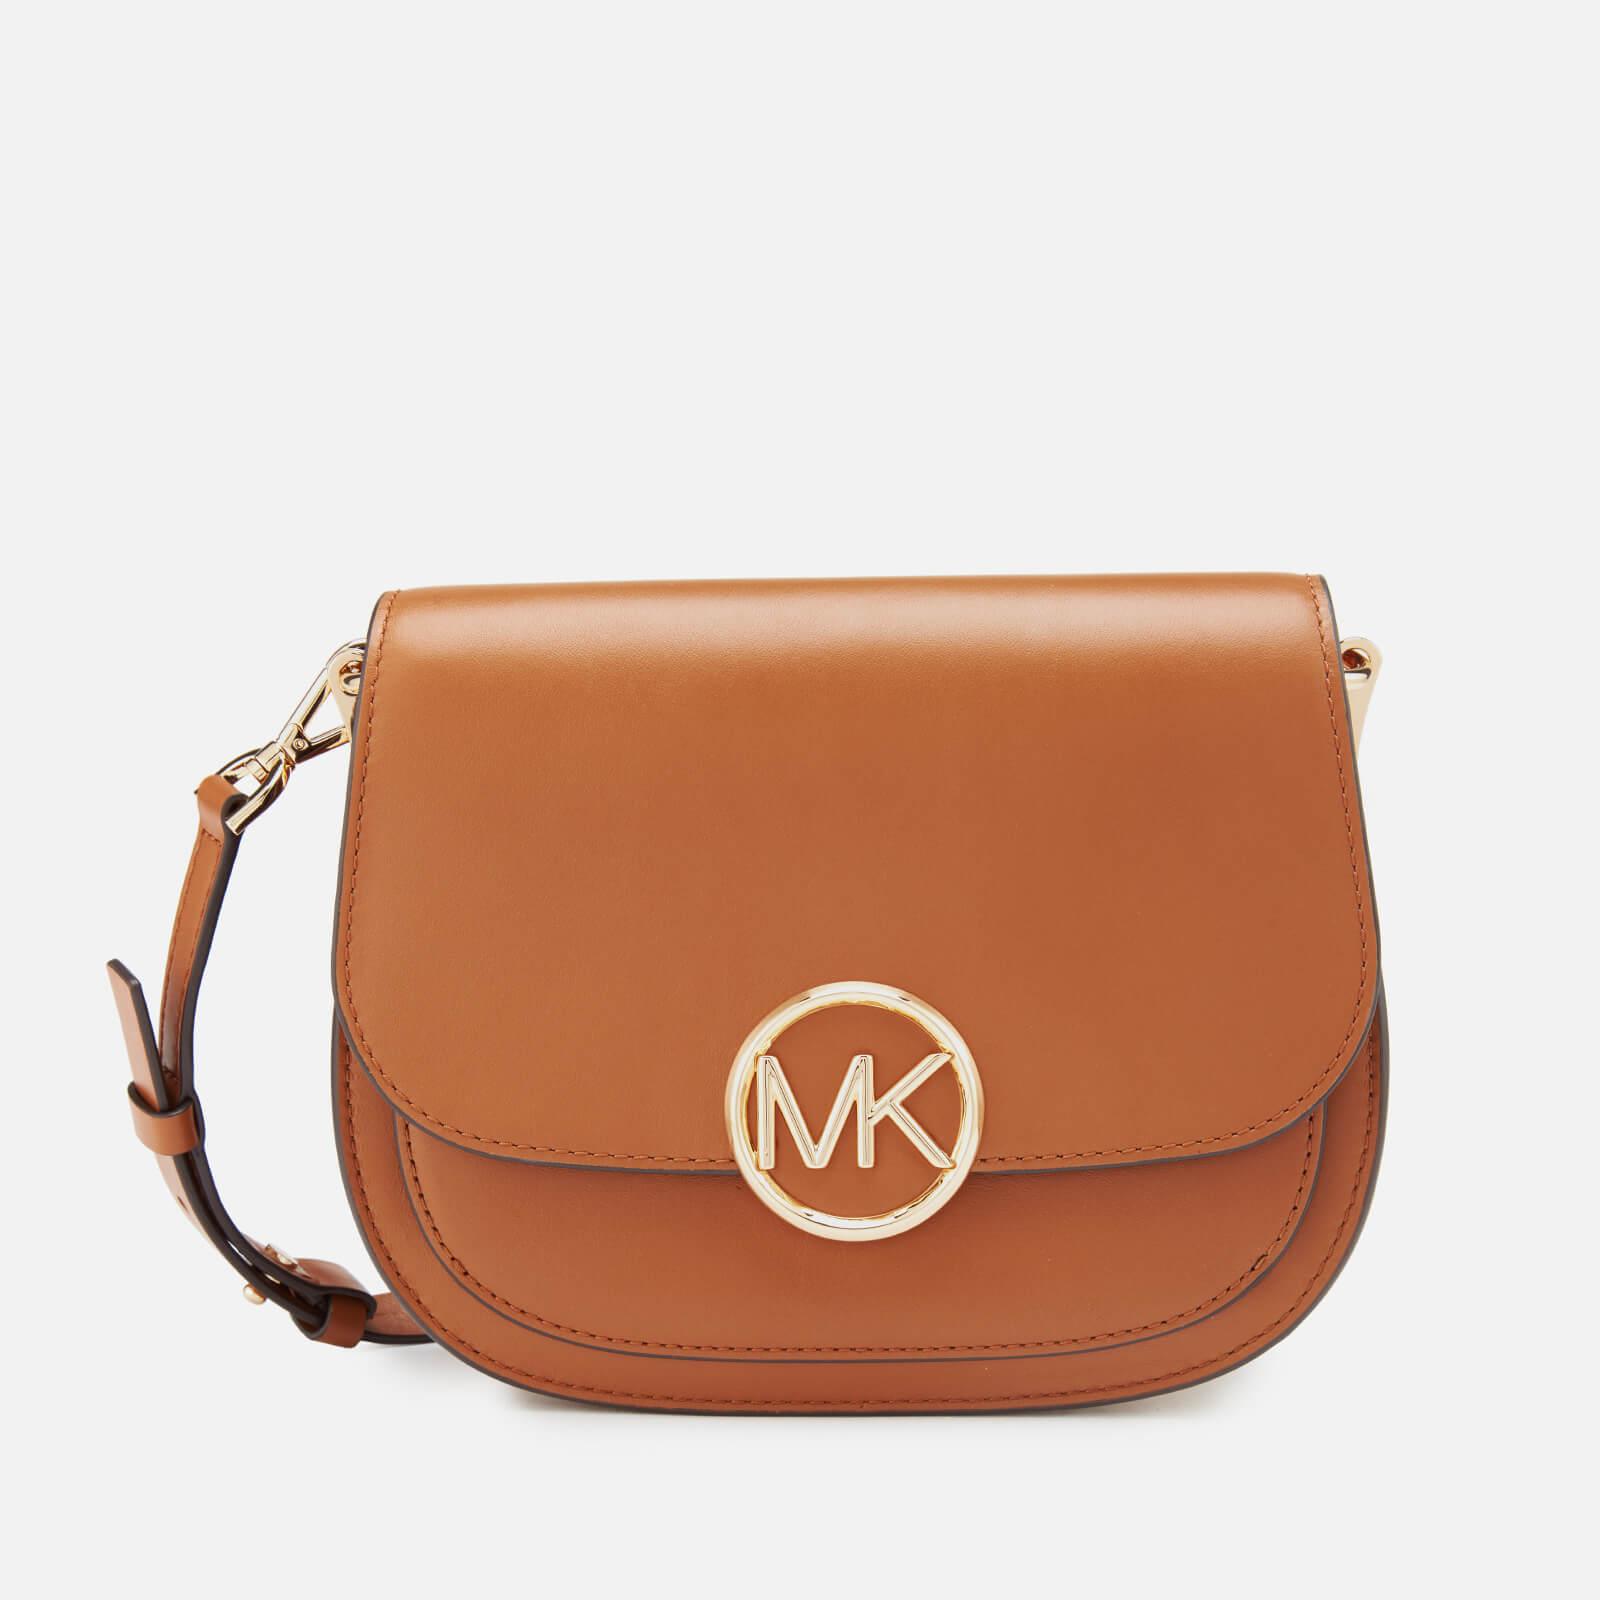 Lyst - MICHAEL Michael Kors Lillie Medium Saddle Messenger Bag in Brown